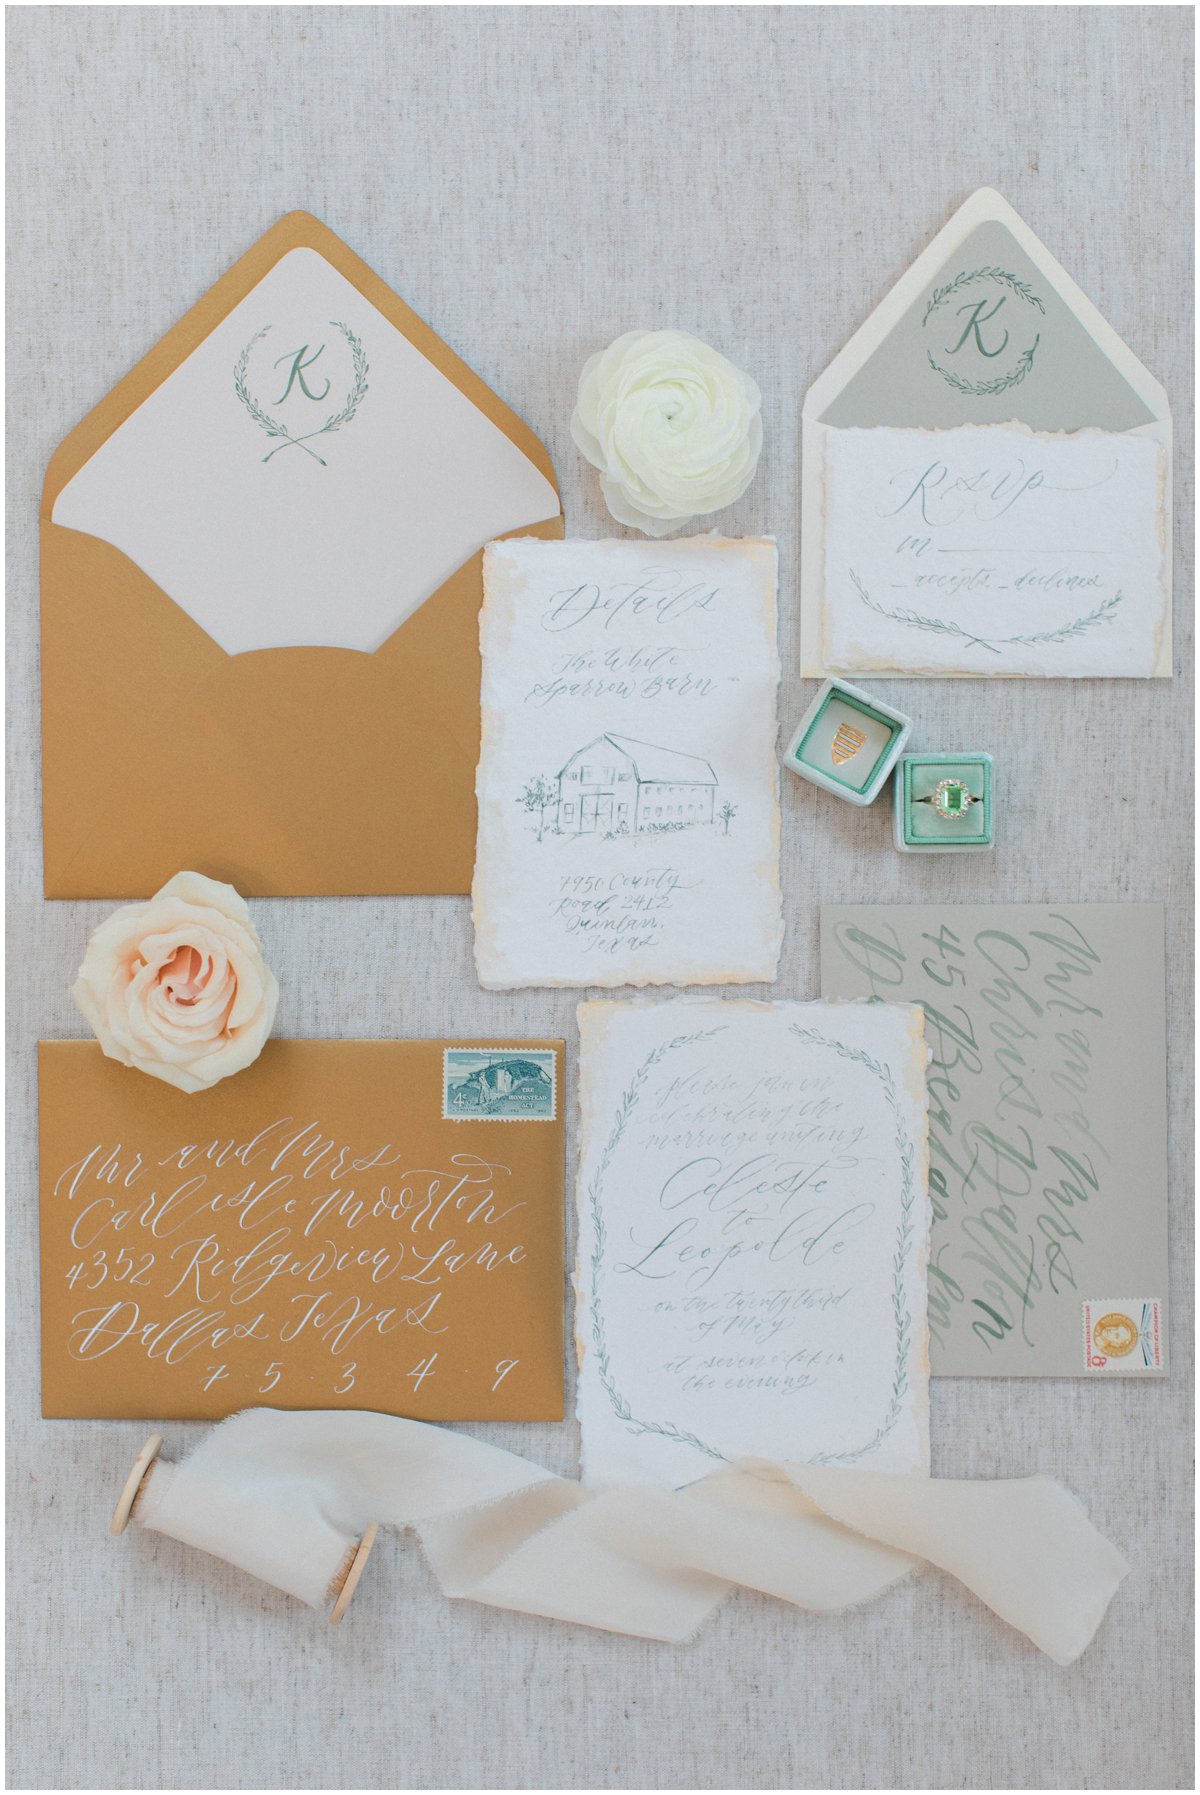 Ethereal wedding invitations